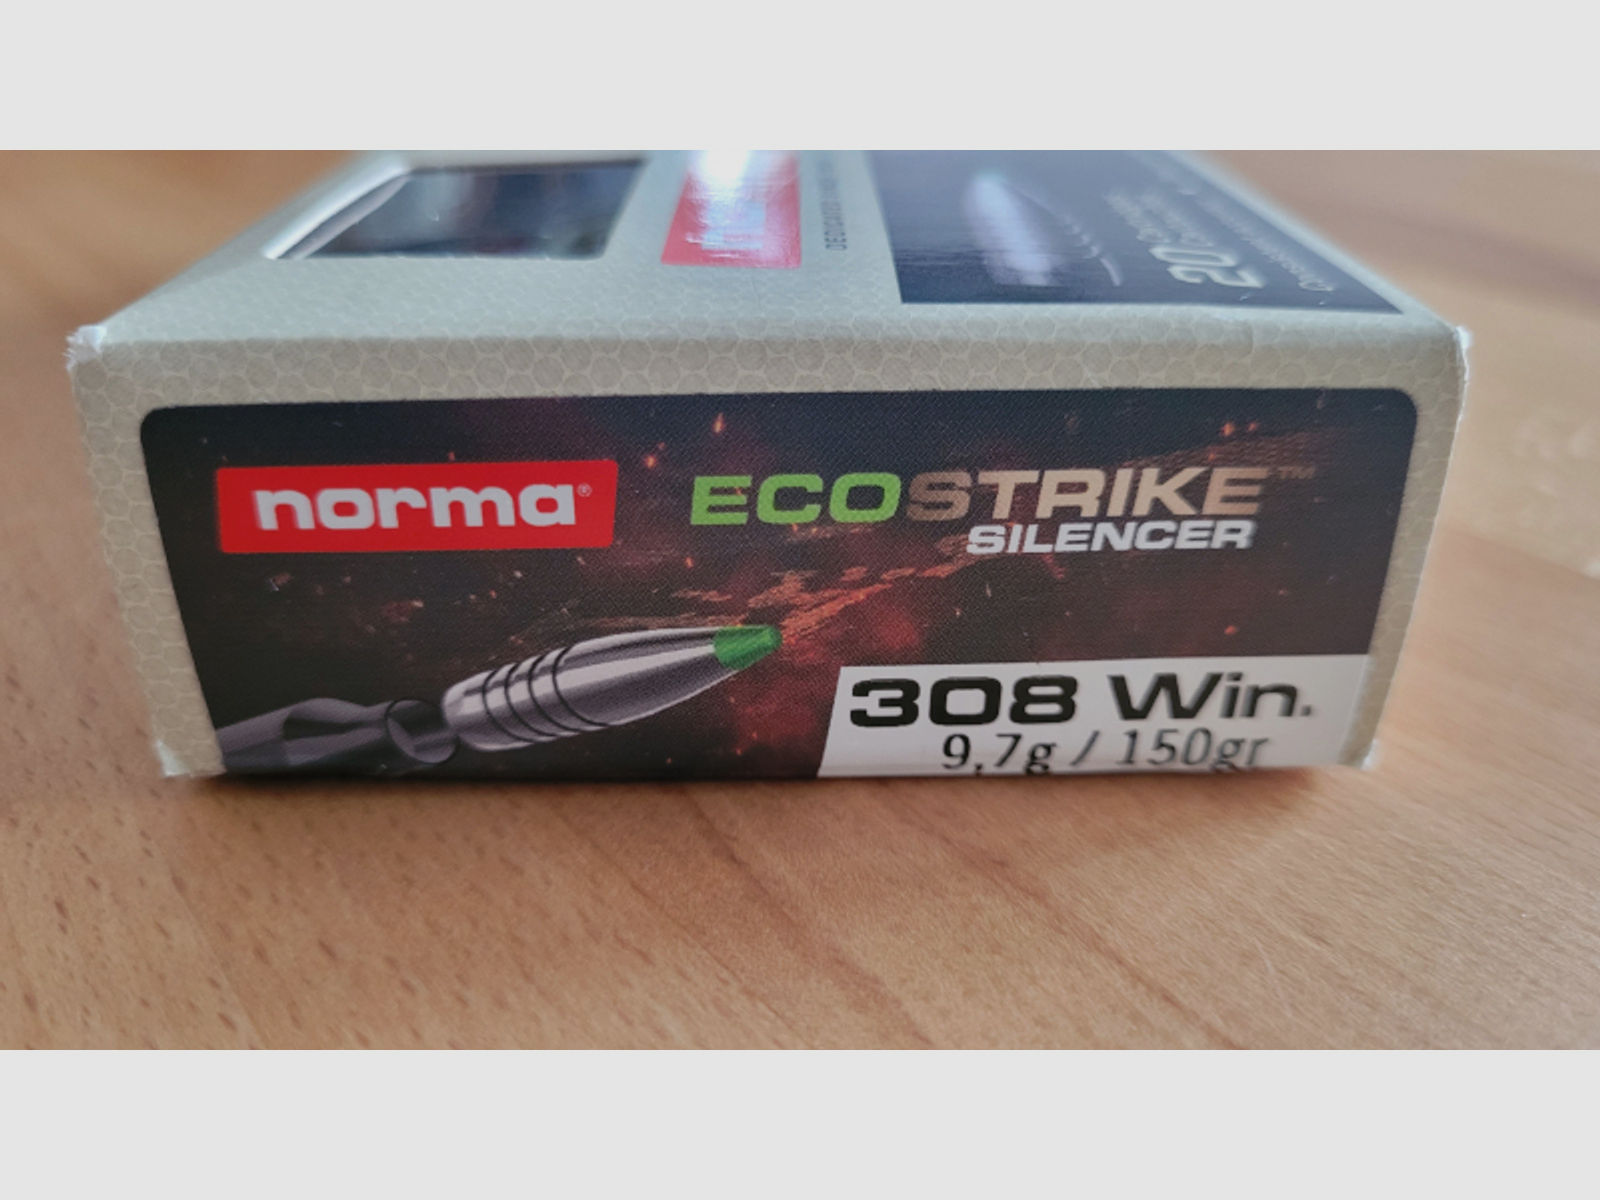 Norma Ecostrike 9,7 g 150gr Silencer 308